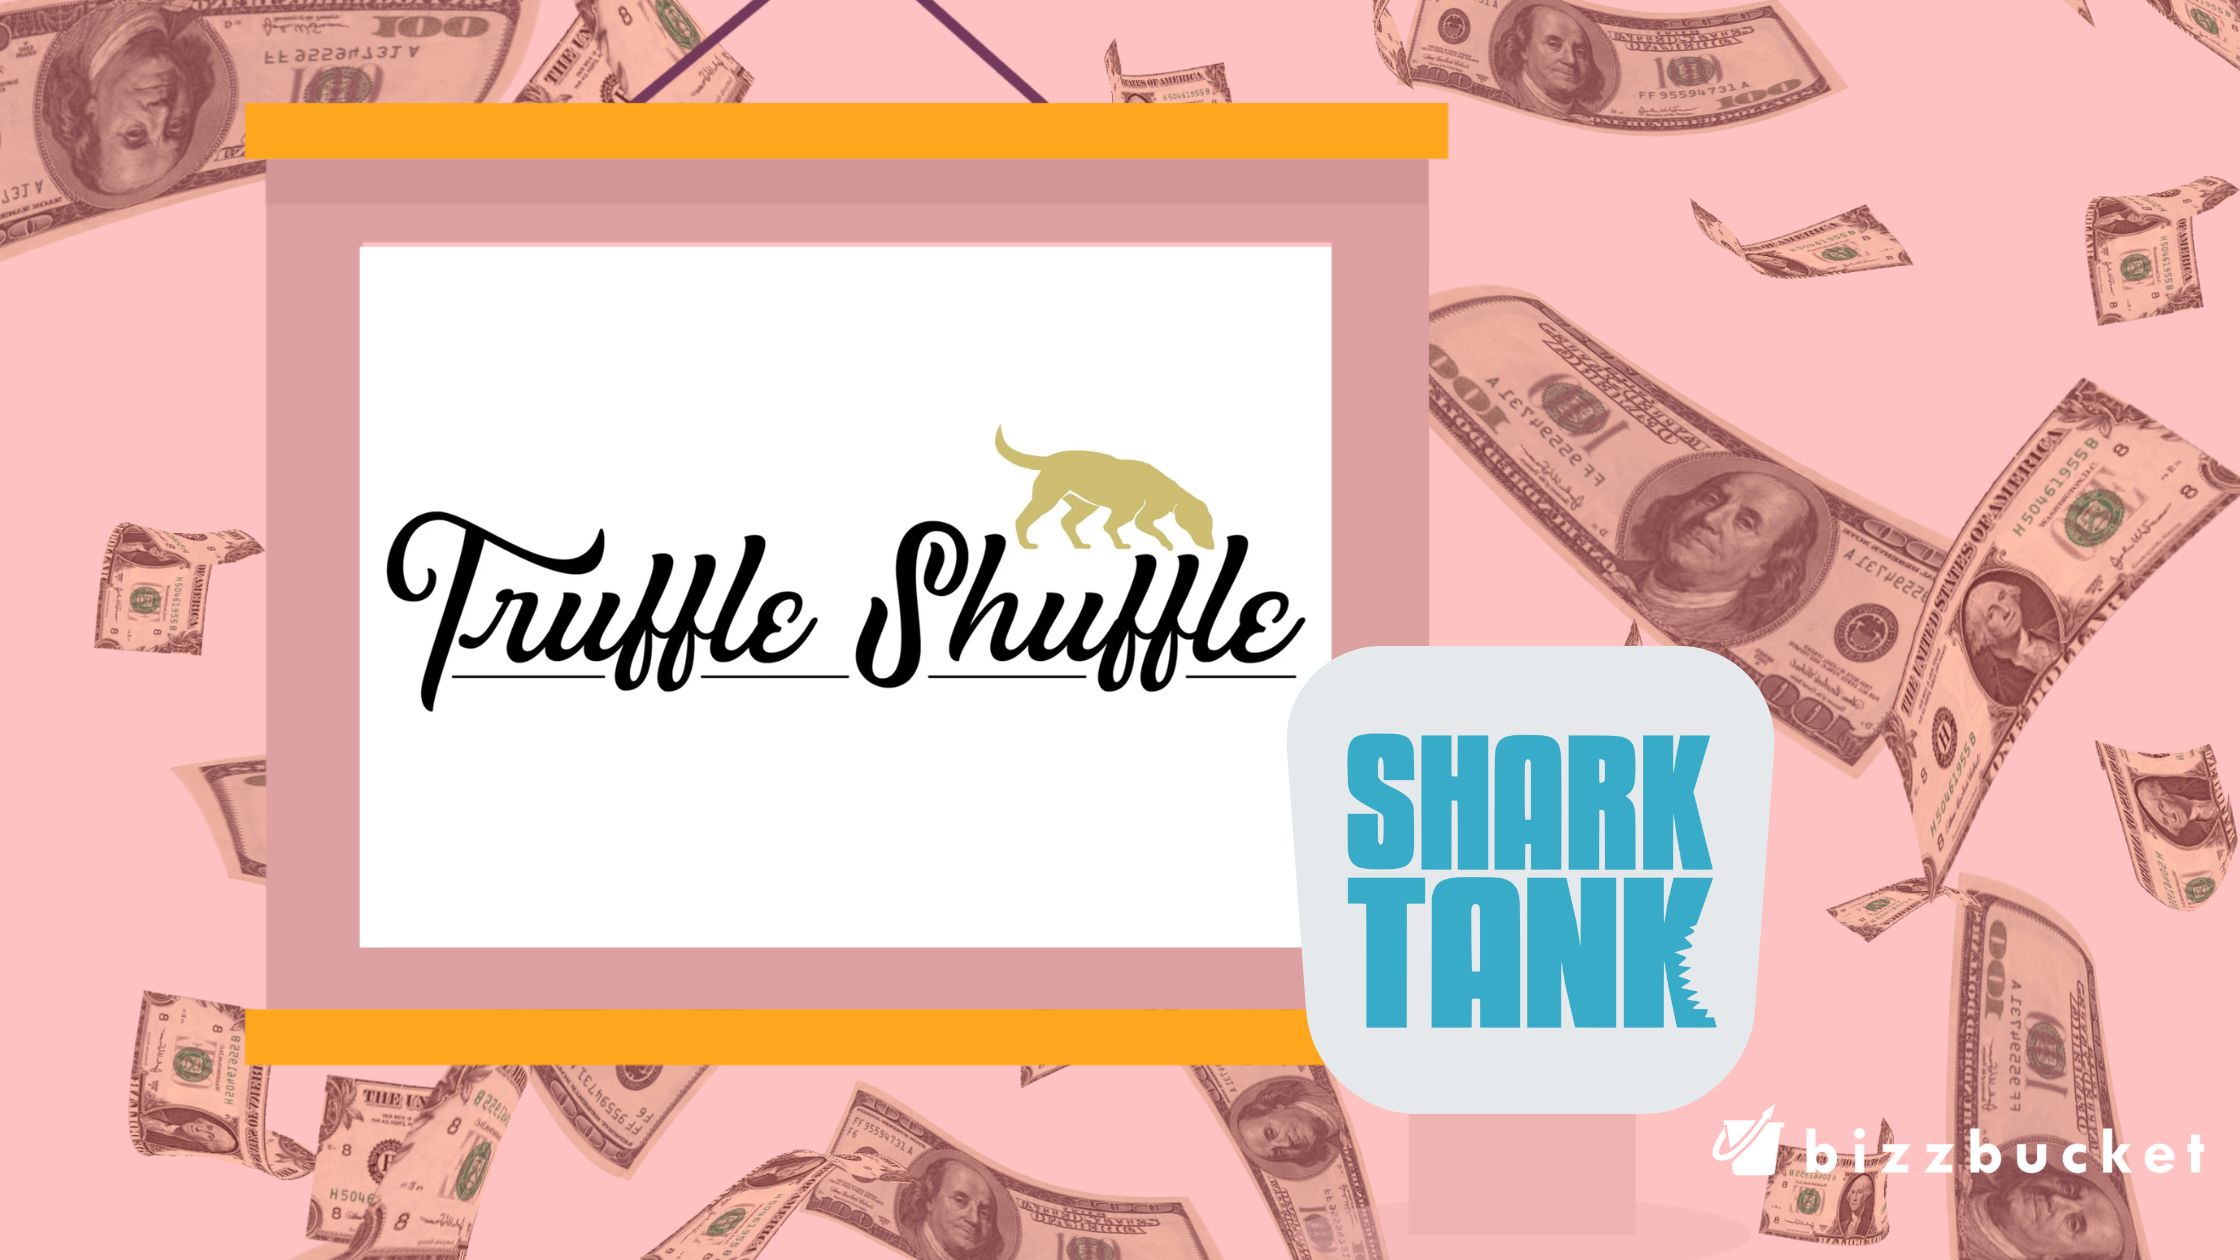 Truffle shuffle shark tank update